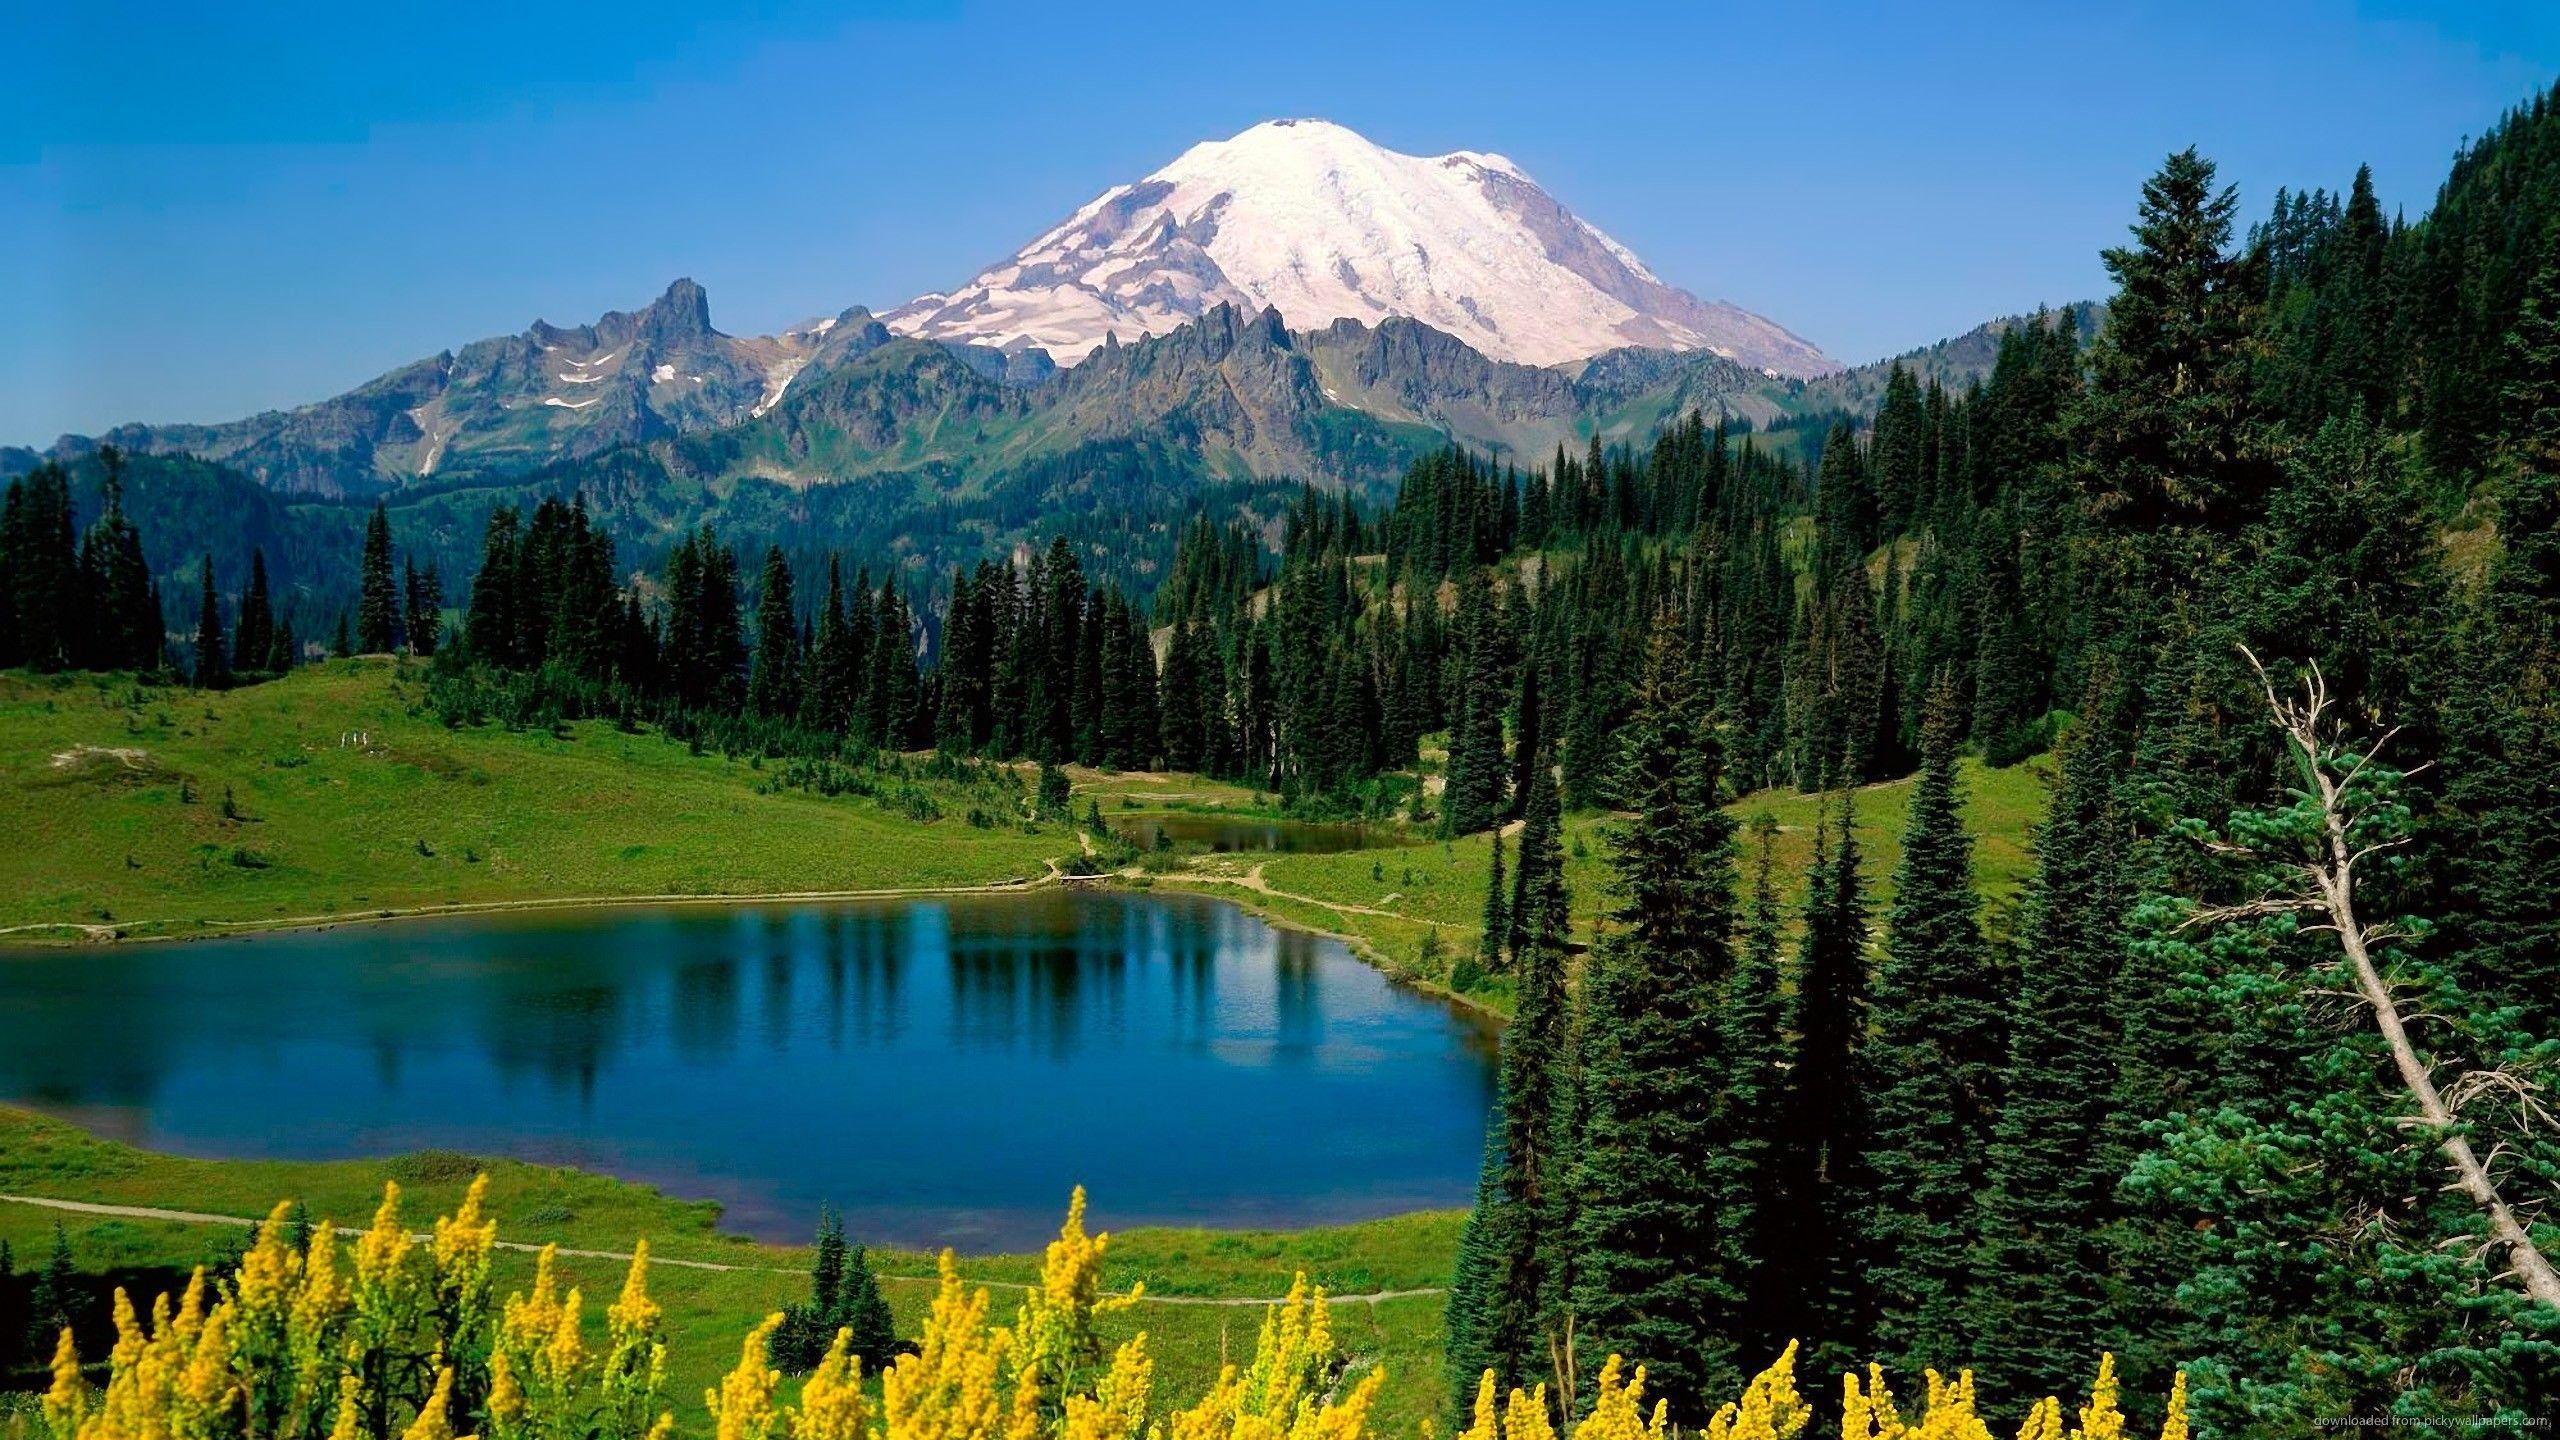 Download 2560x1440 Mount Rainier National Park Wallpaper